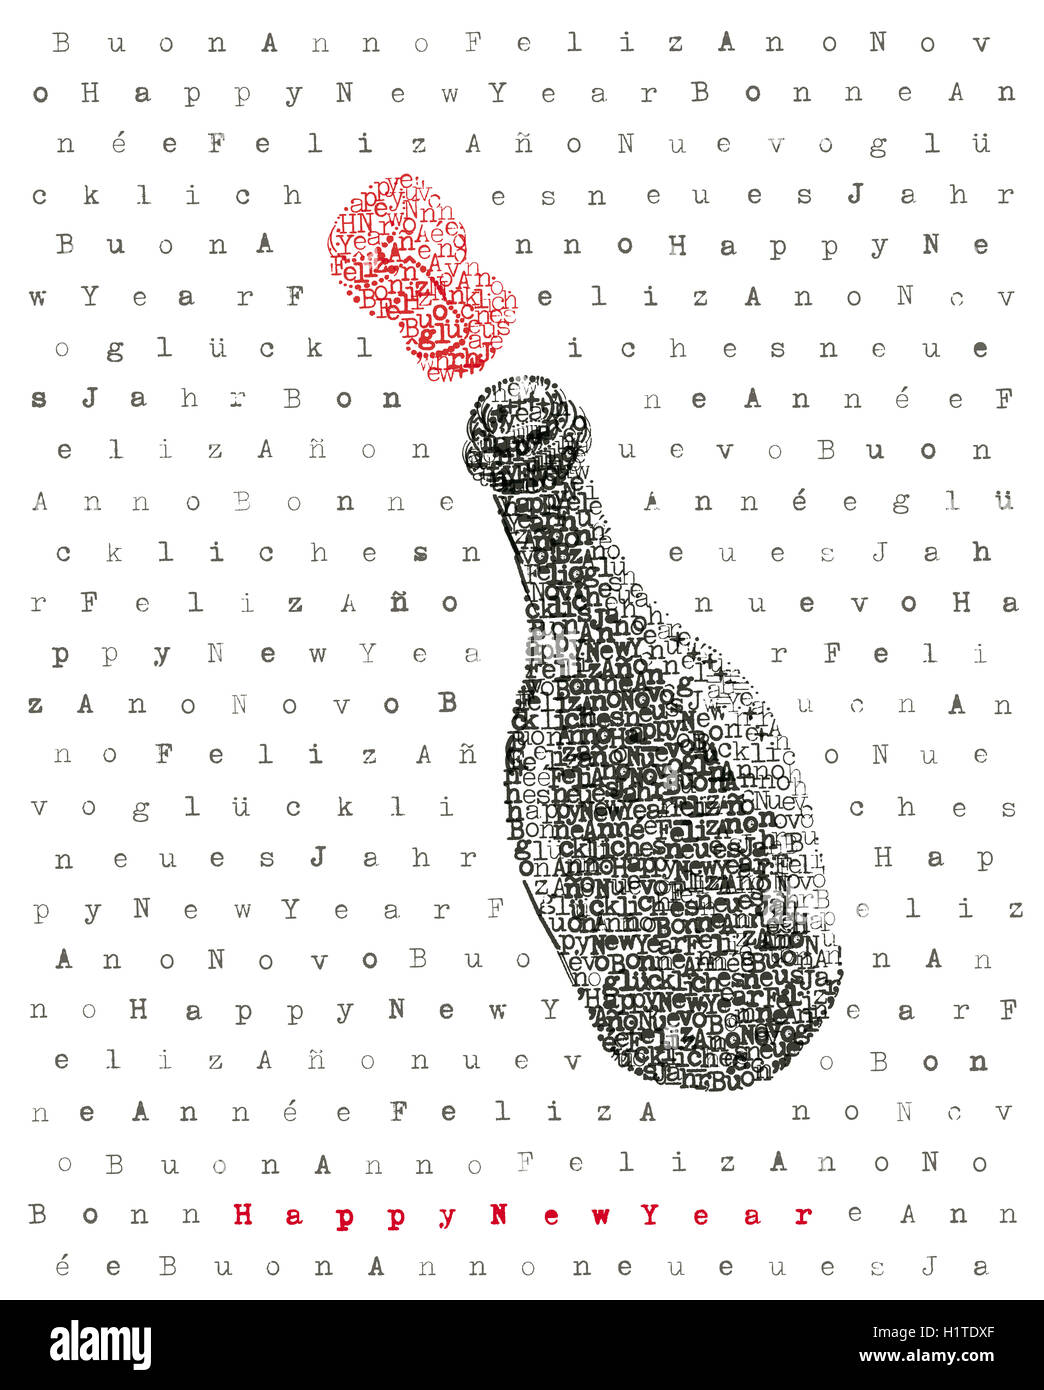 Happy new year champagne bottle in typewriter art Stock Photo